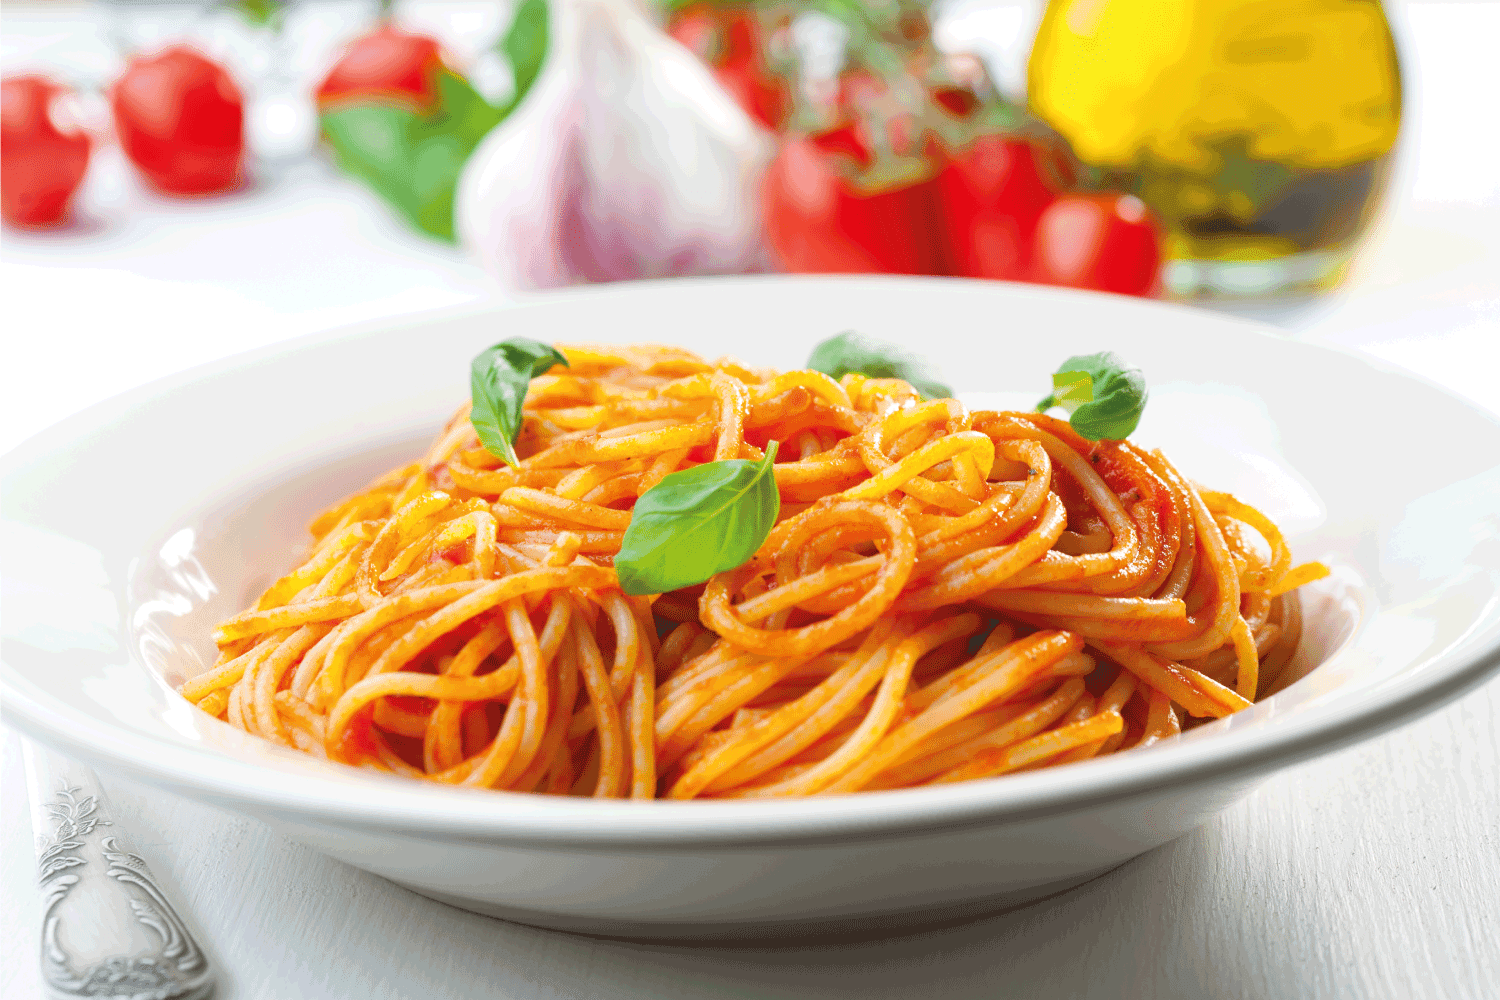 Spaghetti, tomato and basil in a white plate